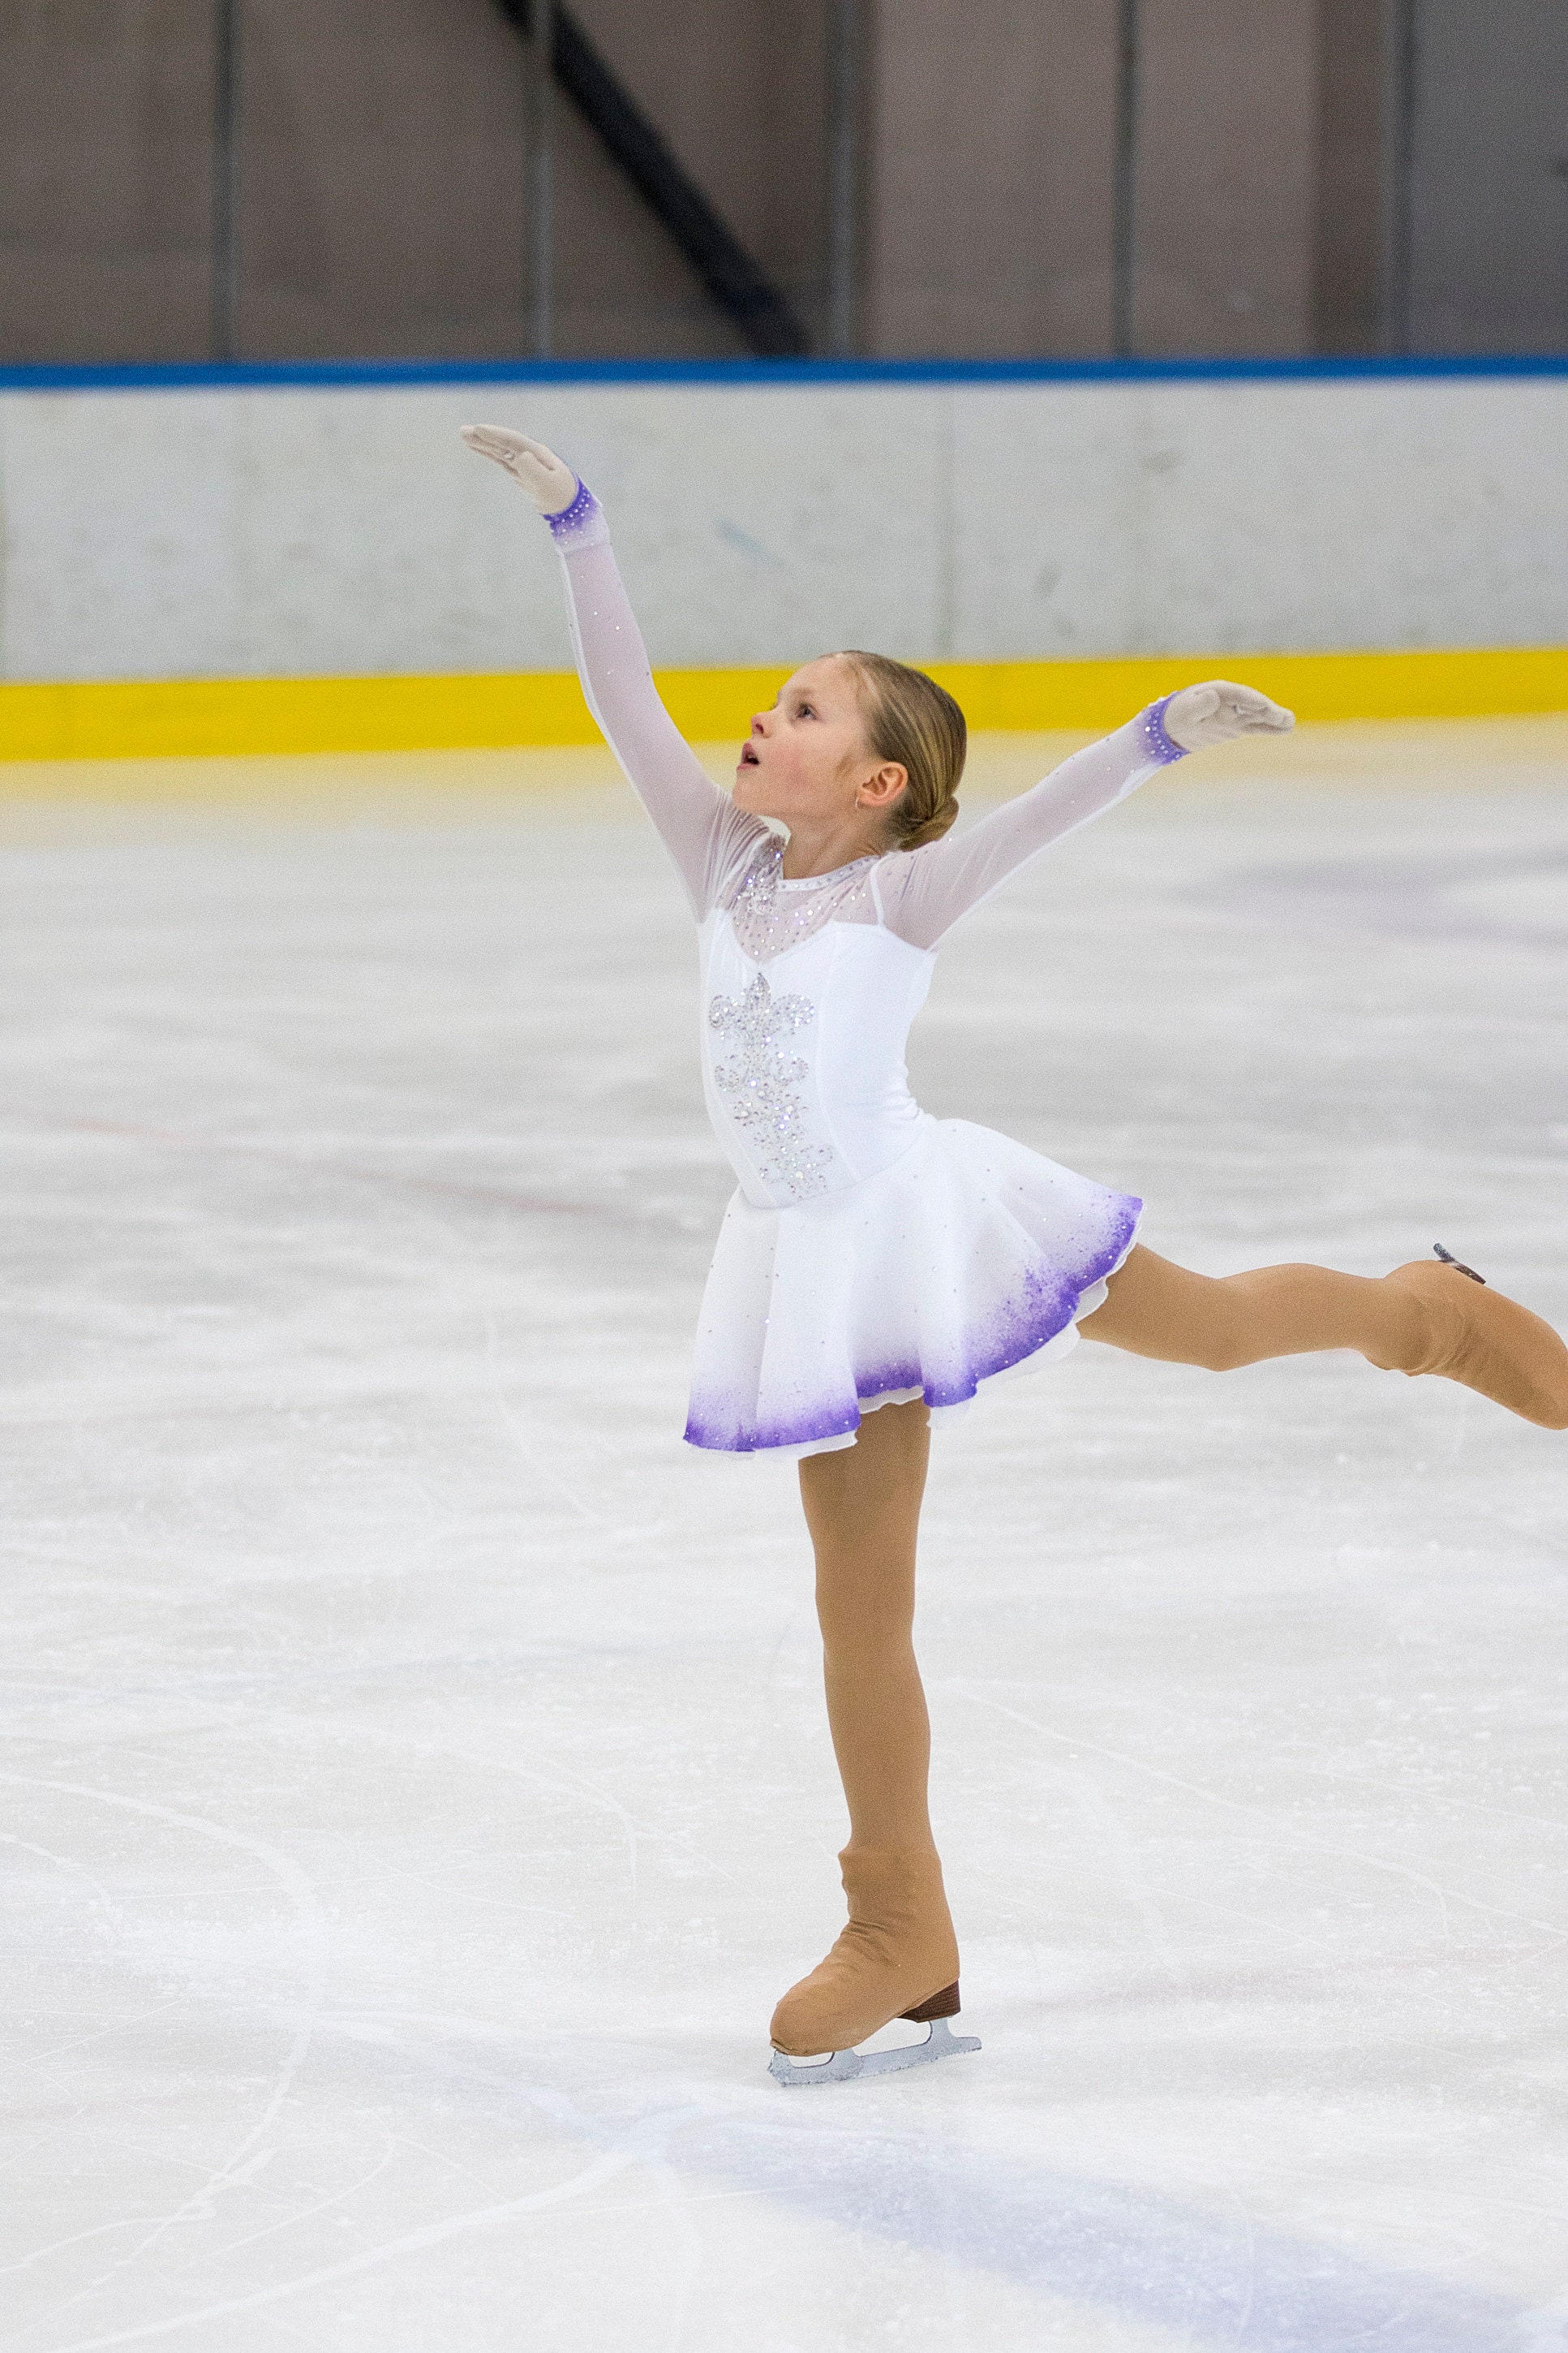 Buy Ice Figure Skating Dress for Competition, Elegant White Dress